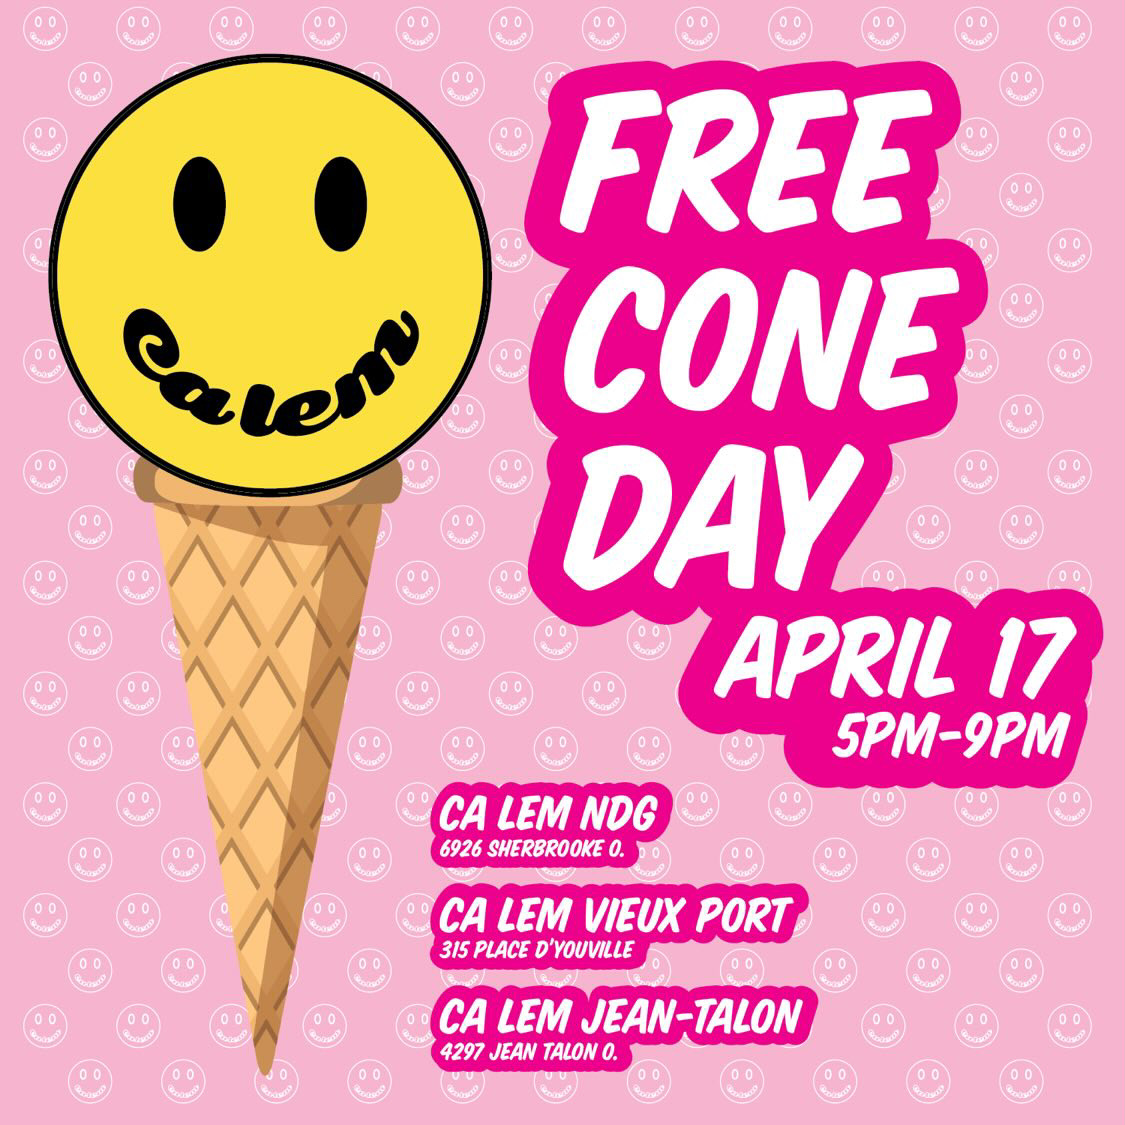 Ca Lem ice cream Montreal free cone day